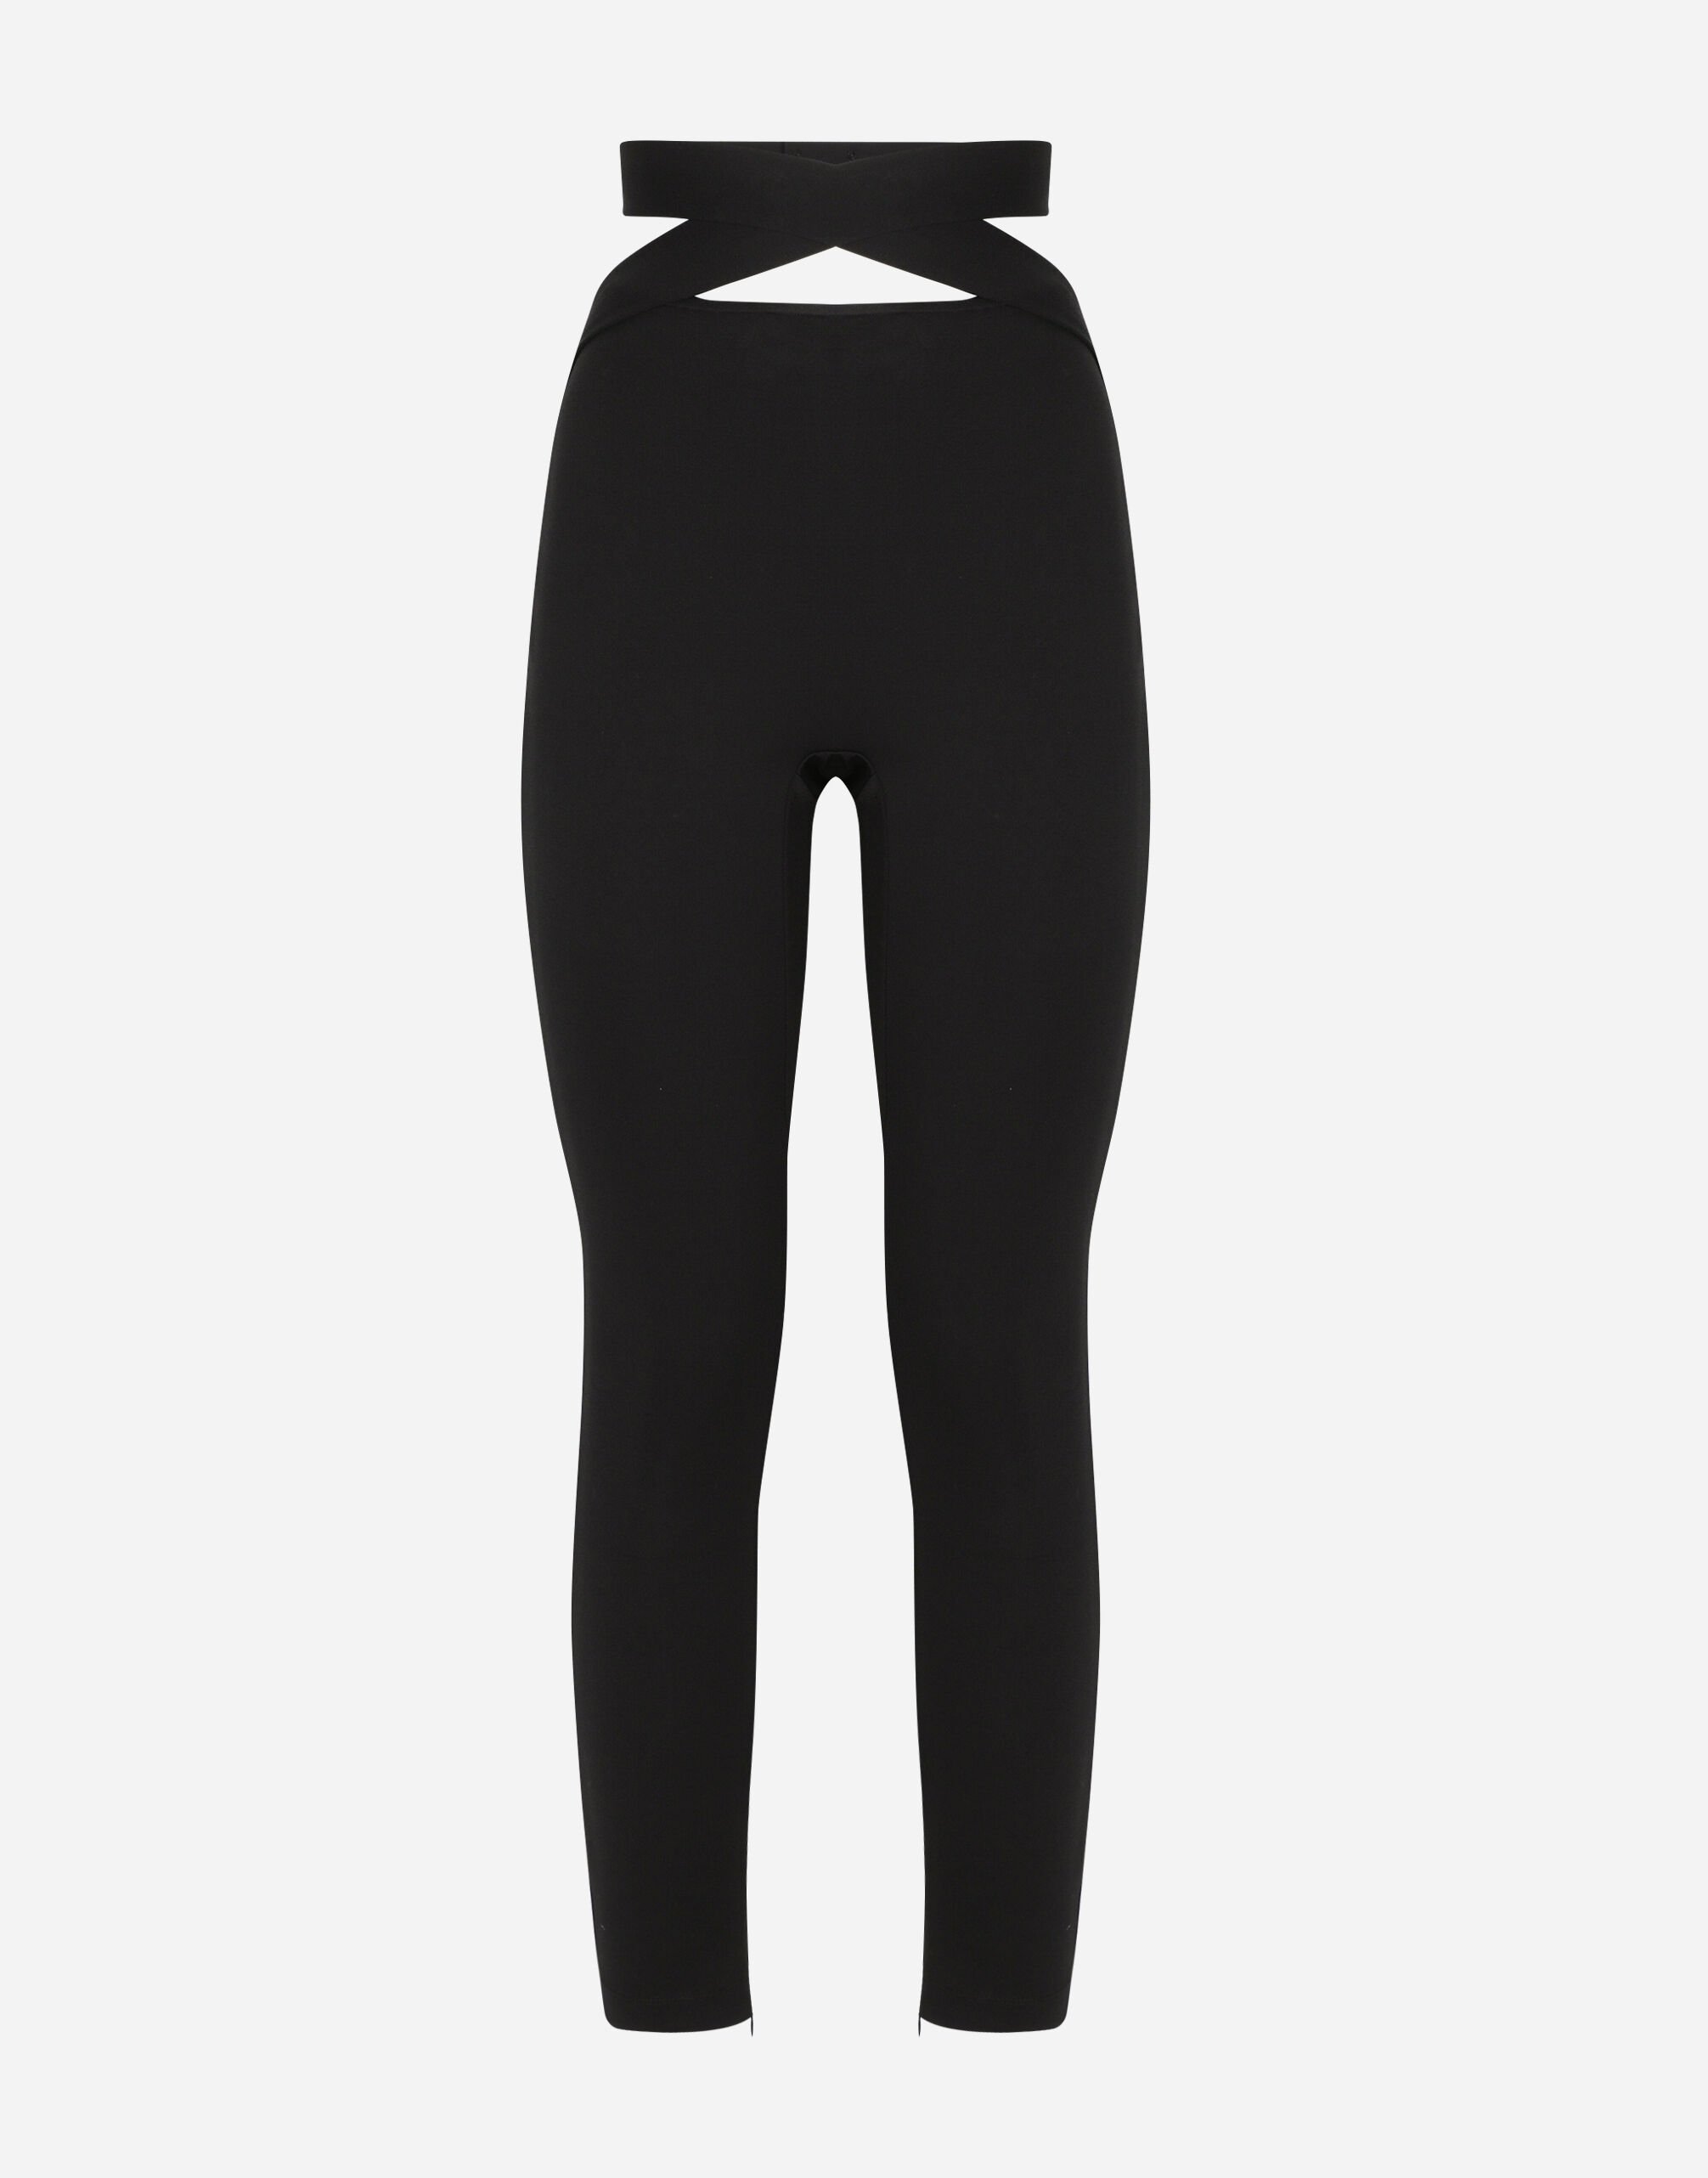 Dolce & Gabbana Viscose pants with strap detail Black F772NTFURL6